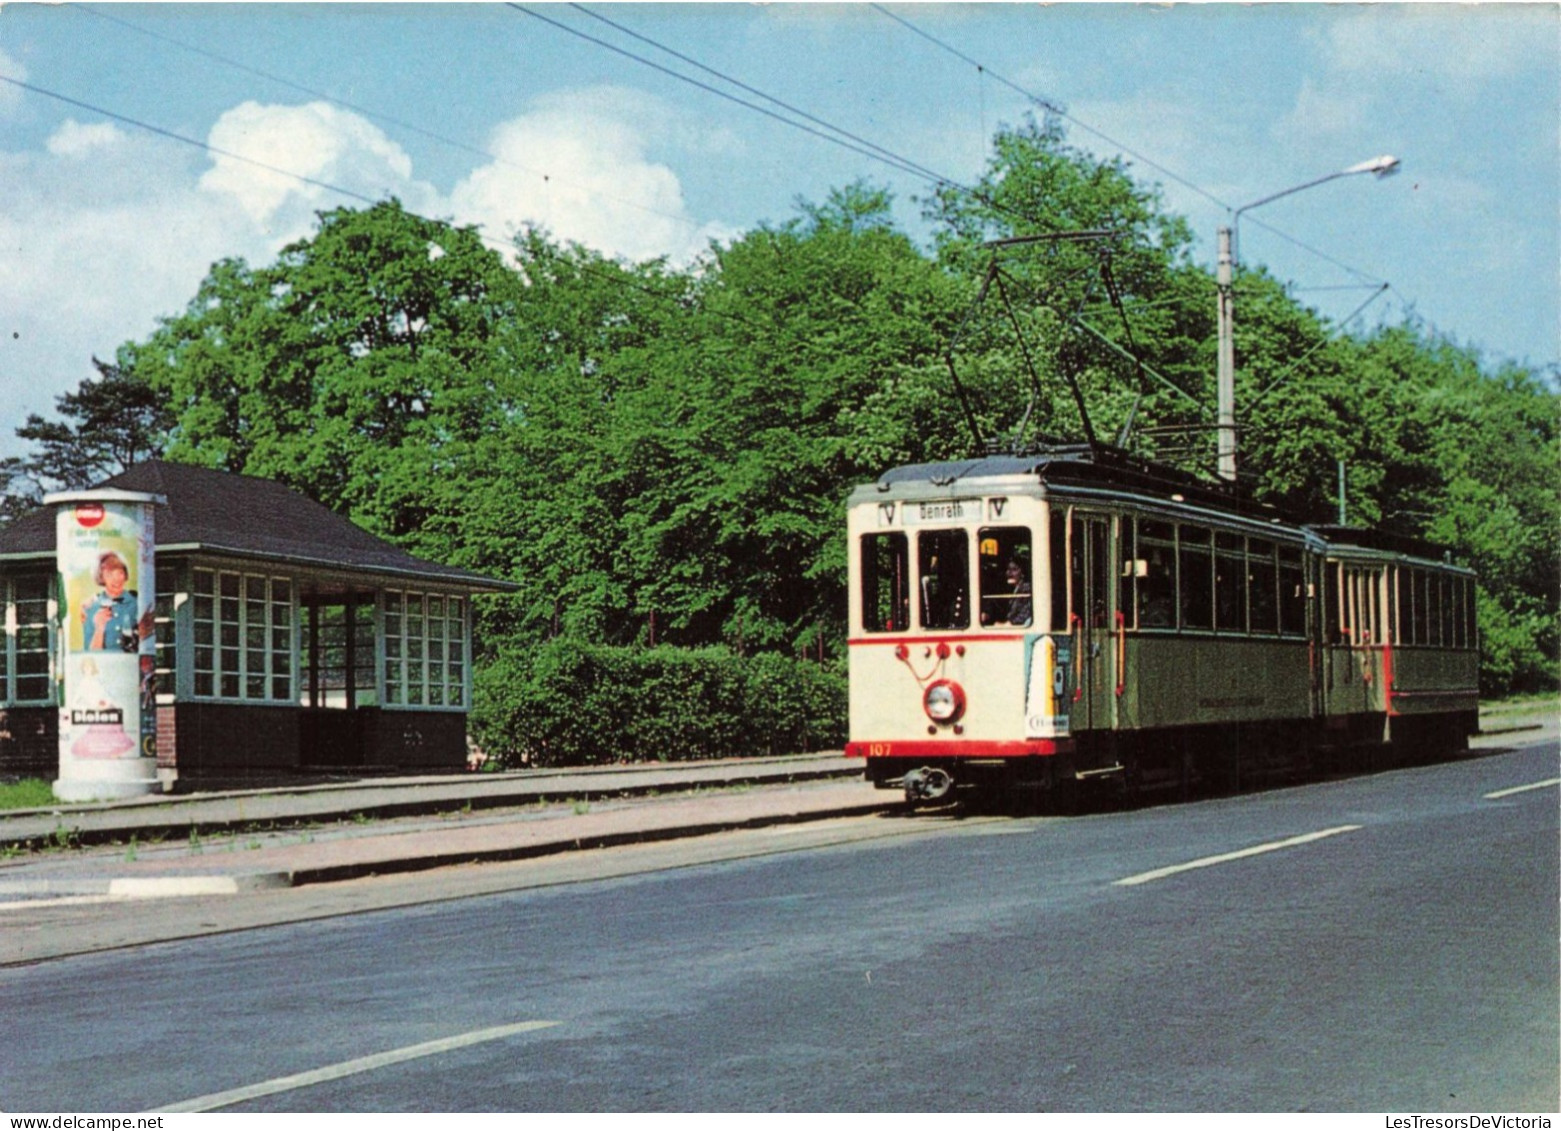 TRANSPORT - Triebwagen 107 Mit Beiwagen - Colorisé - Carte Postale - Tramways